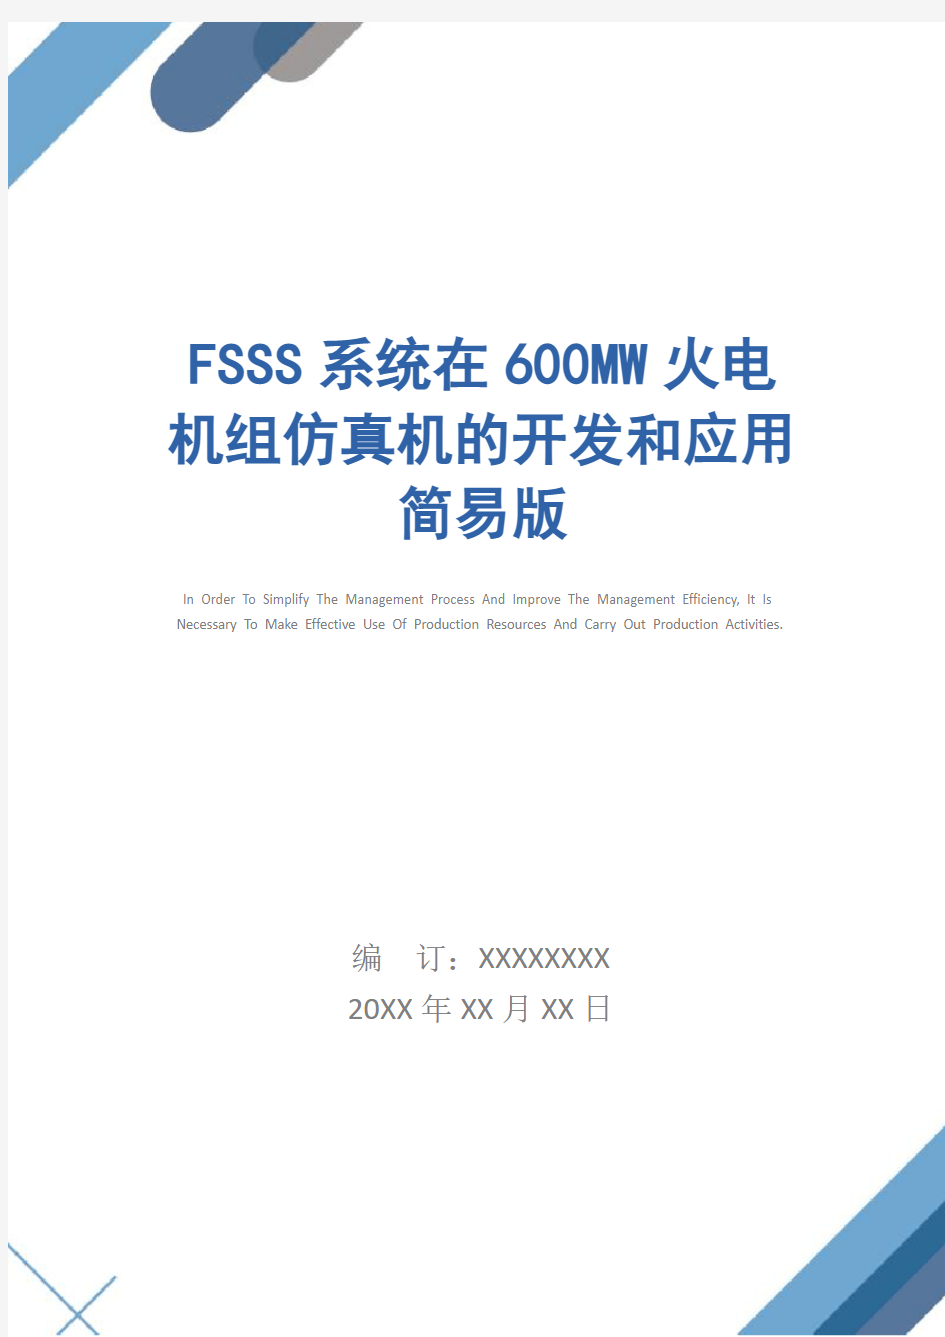 FSSS系统在600MW火电机组仿真机的开发和应用简易版